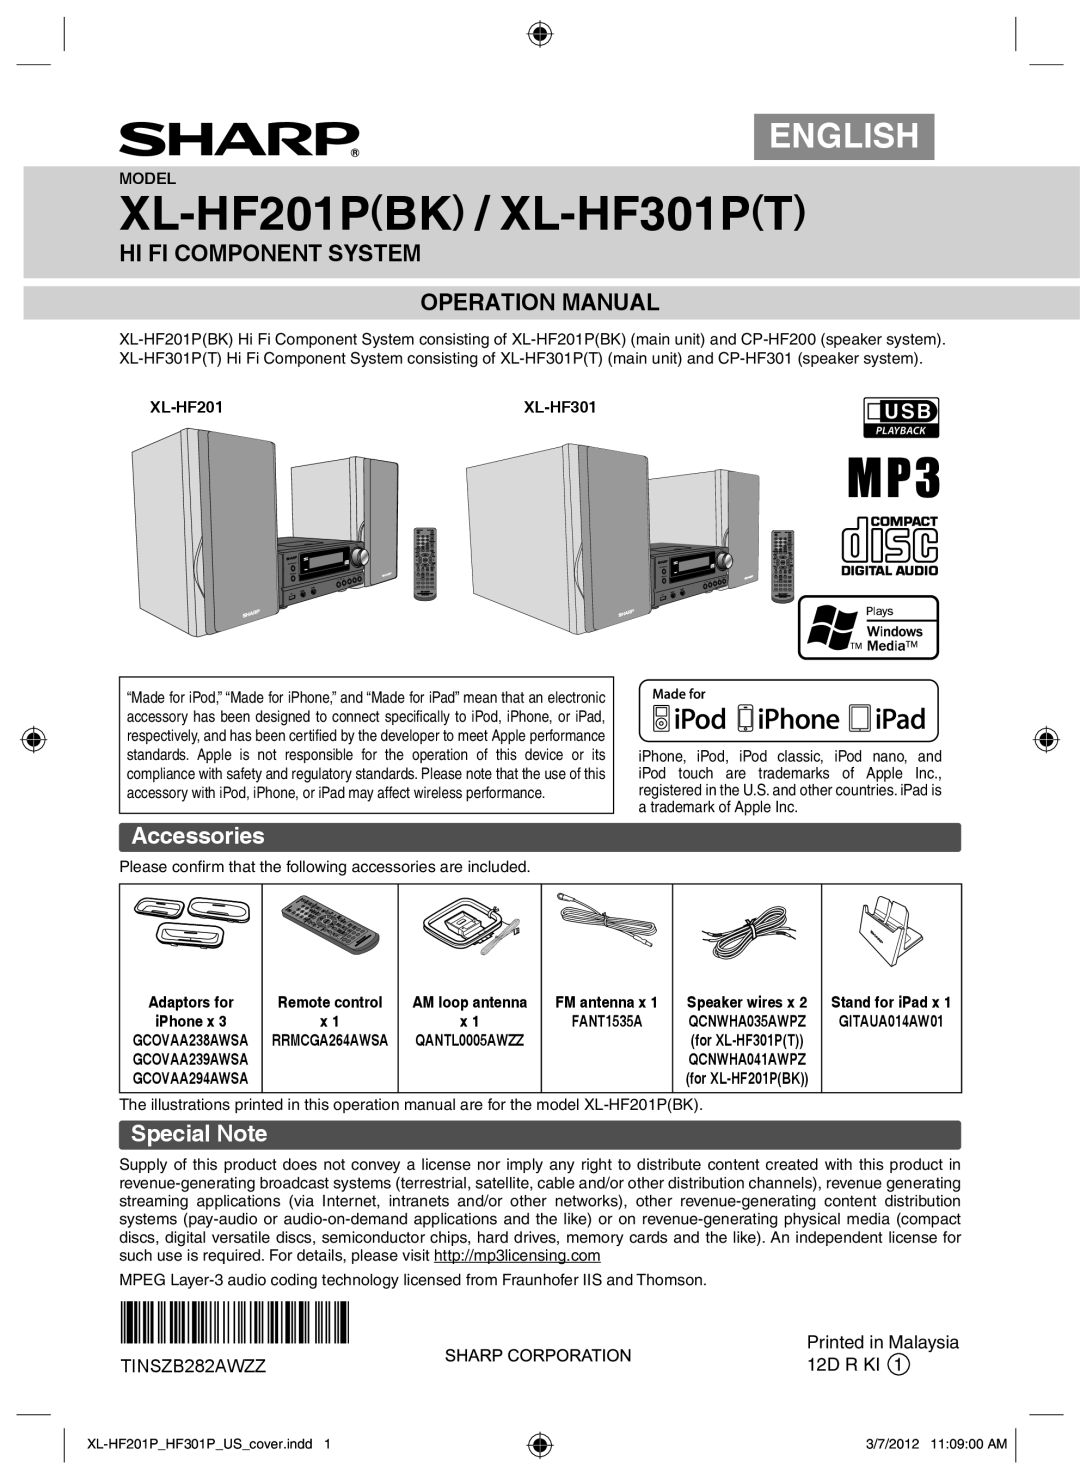 Sharp XLHF201P operation manual Accessories, Special Note, XL-HF201PBK / XL-HF301PT, English, TINSZB282AWZZ 